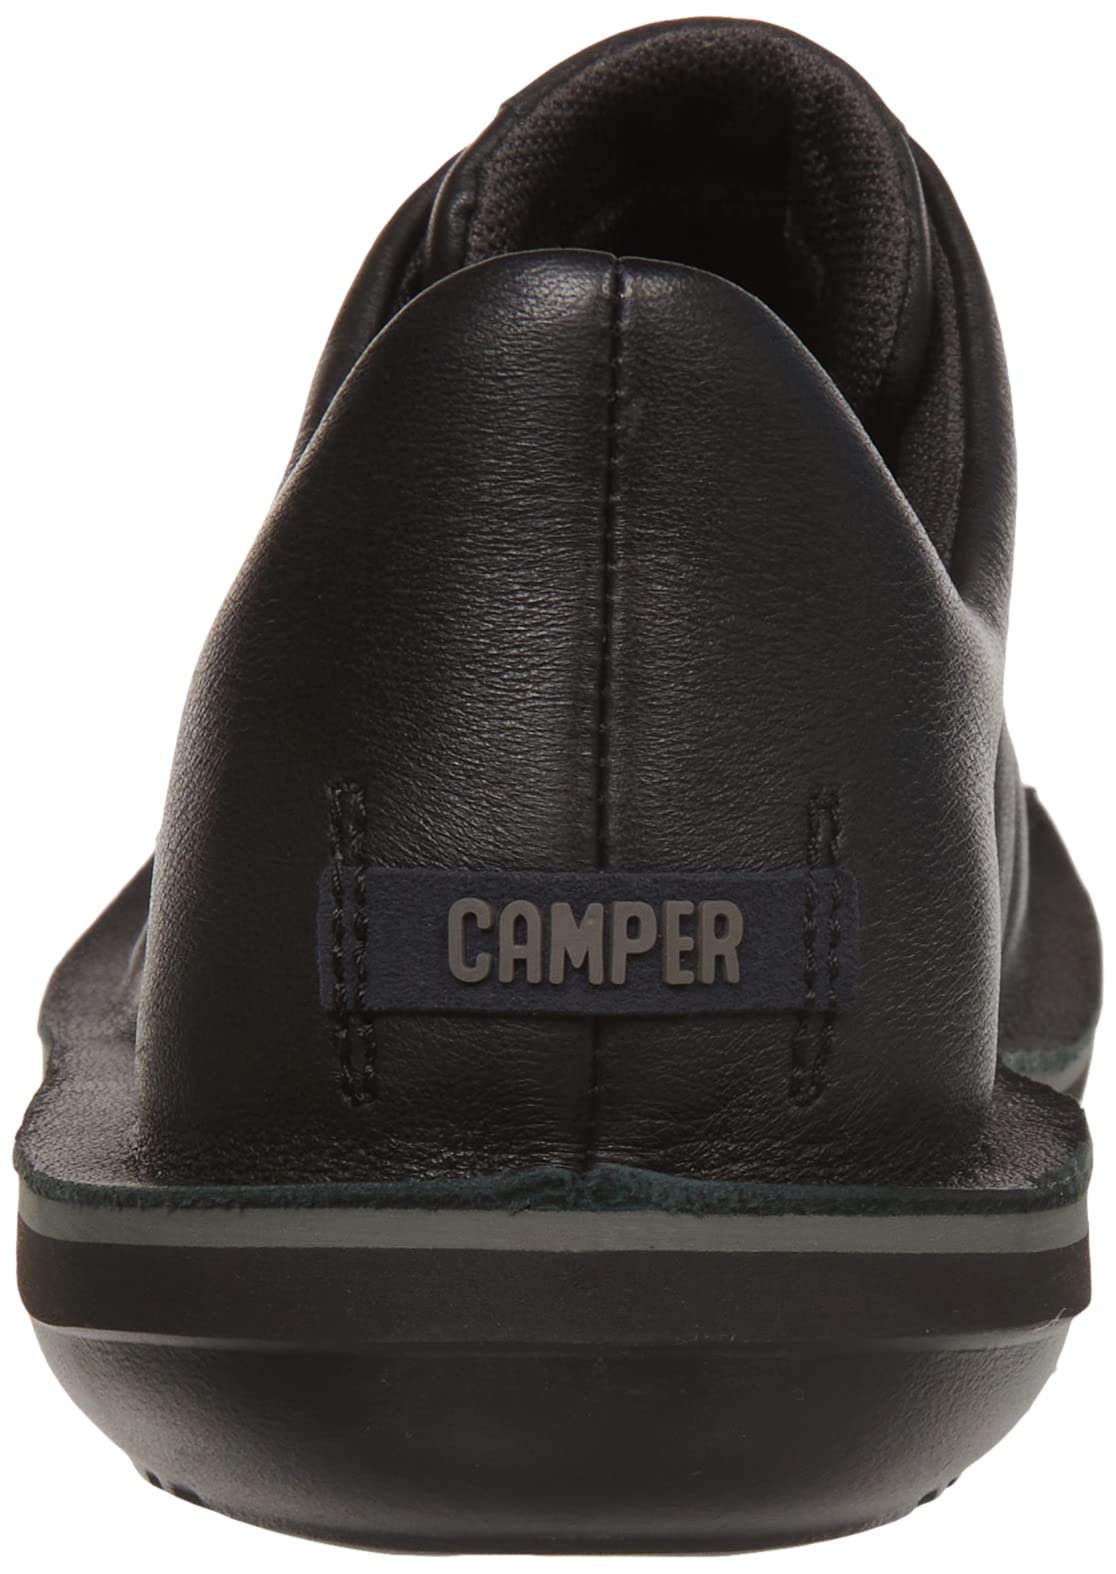 Camper Men's Fashion Sneaker